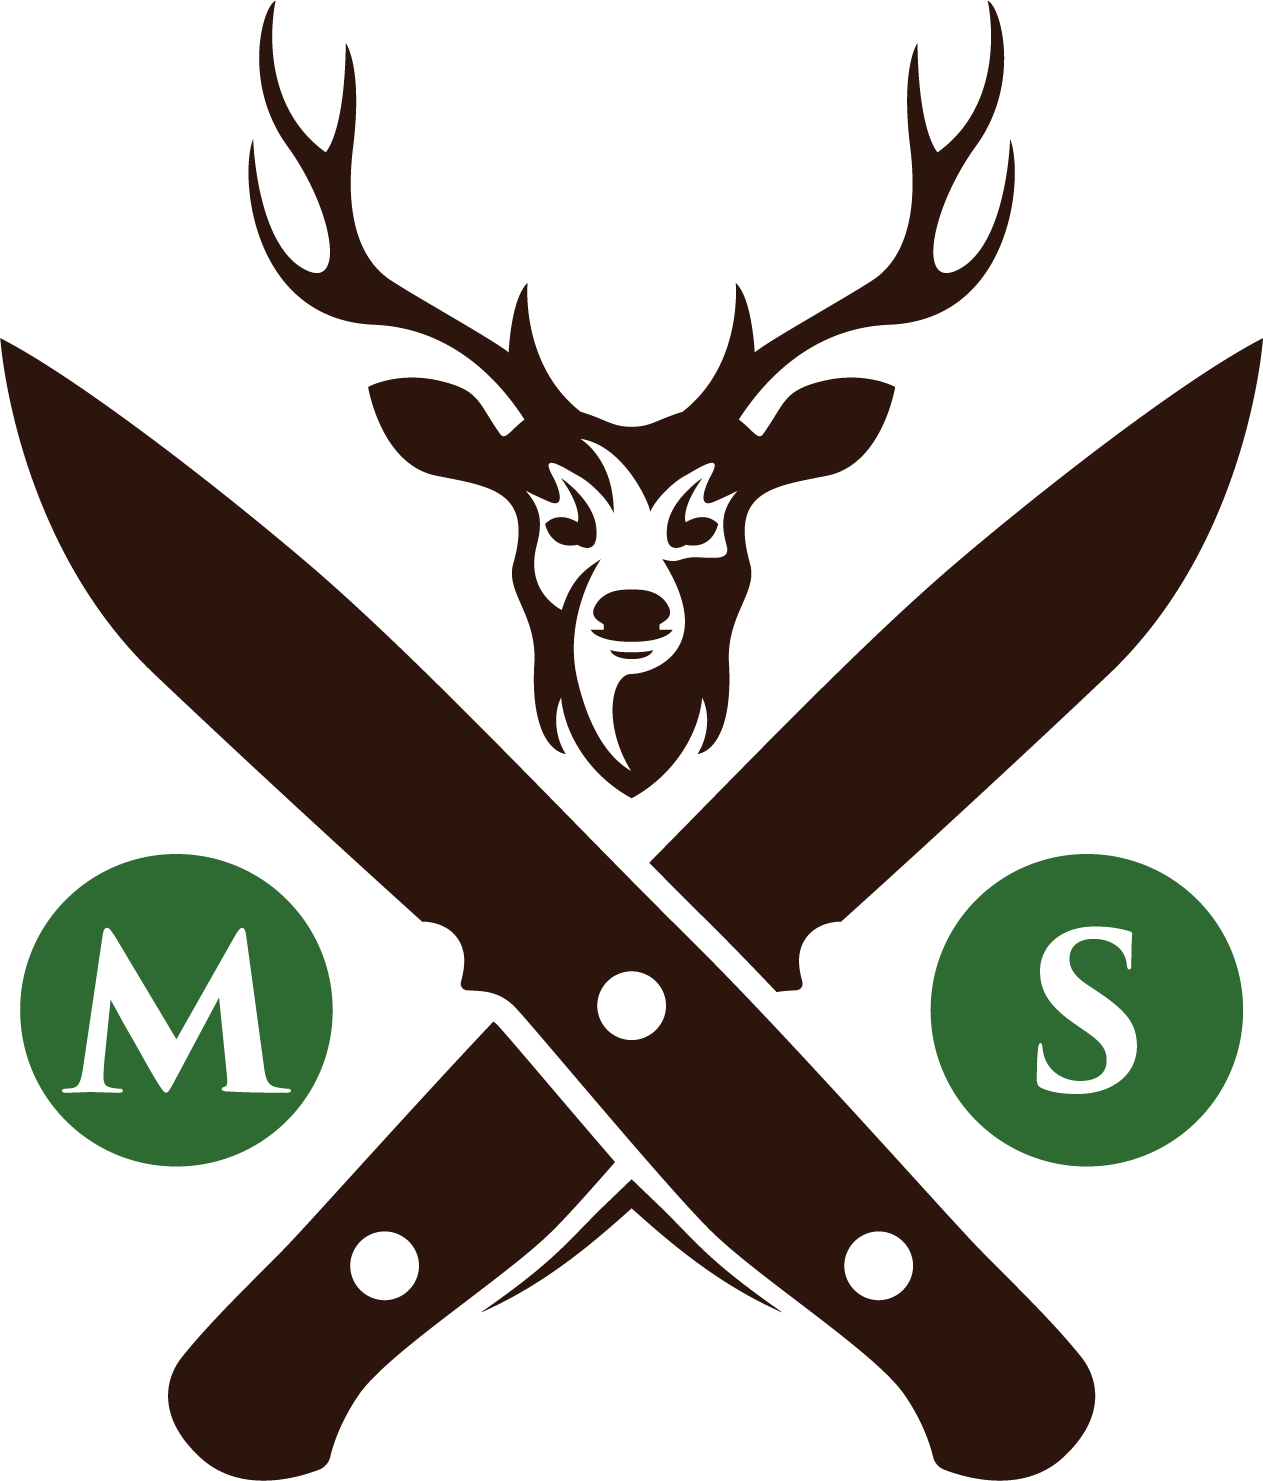 Messershop-logo-sign-final